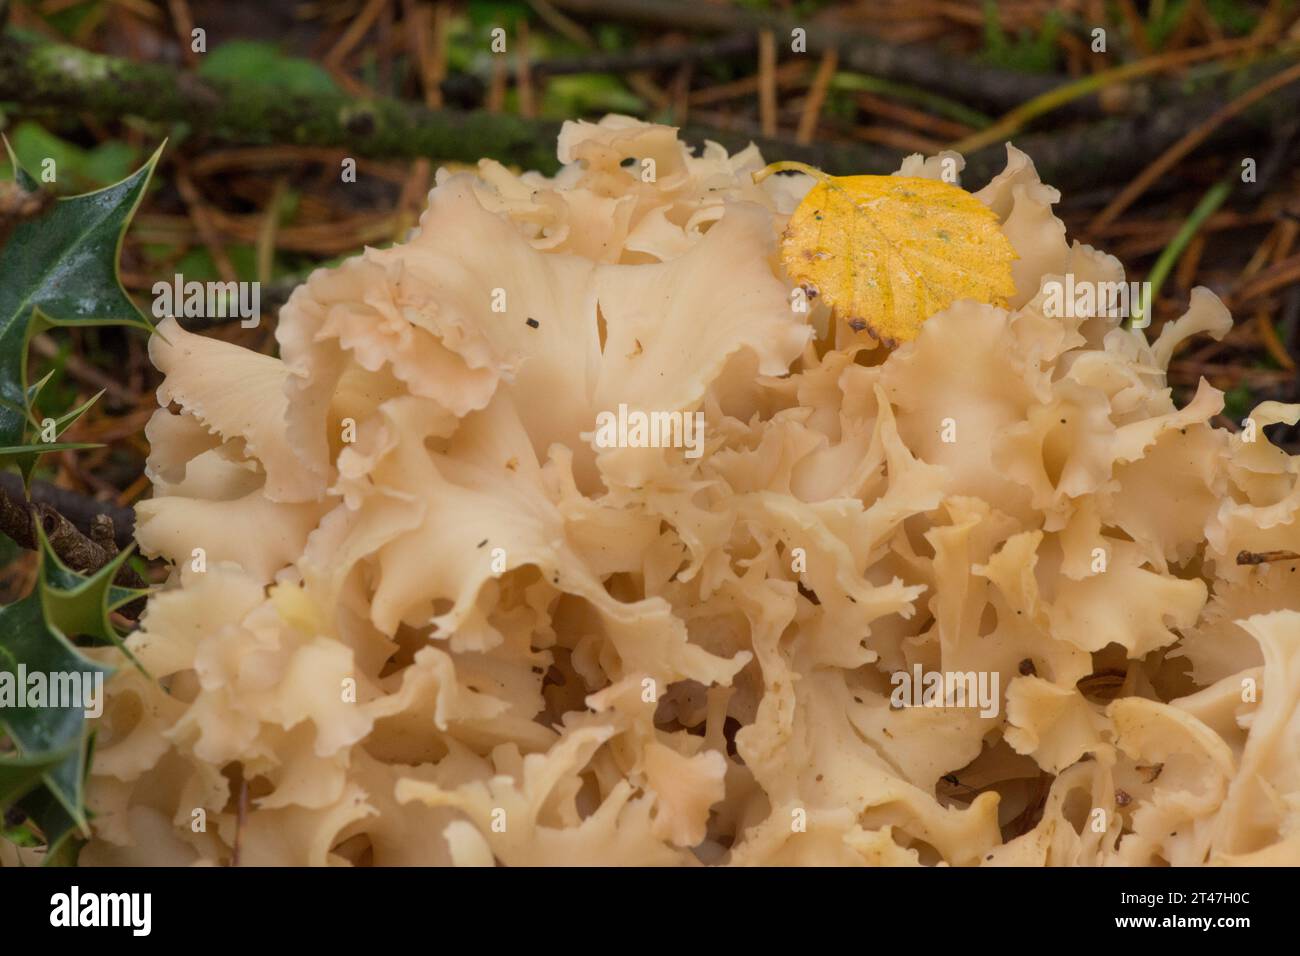 Wood cauliflower, Cauliflower fungus, Sparassis crispa, rosette of edible fungi growing at the base of Scots Pine tree Stock Photo